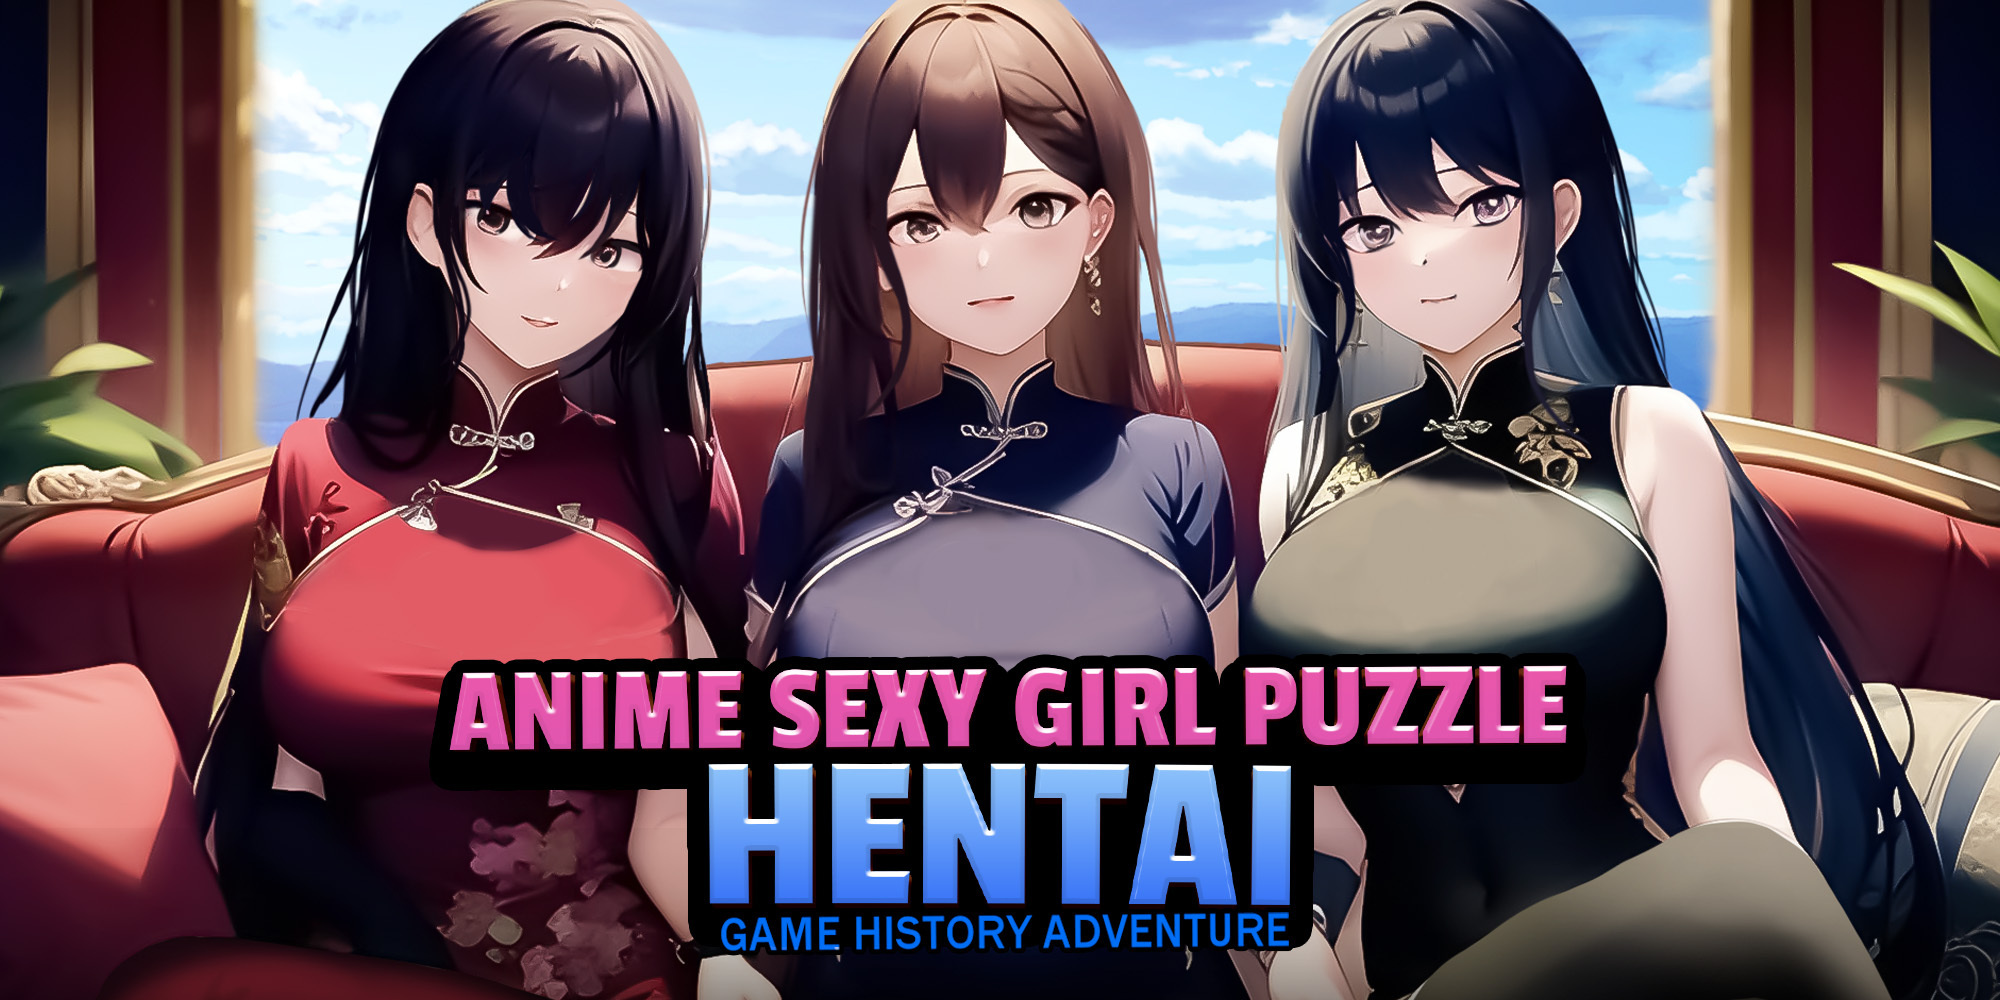 Anime-sharing hentai game